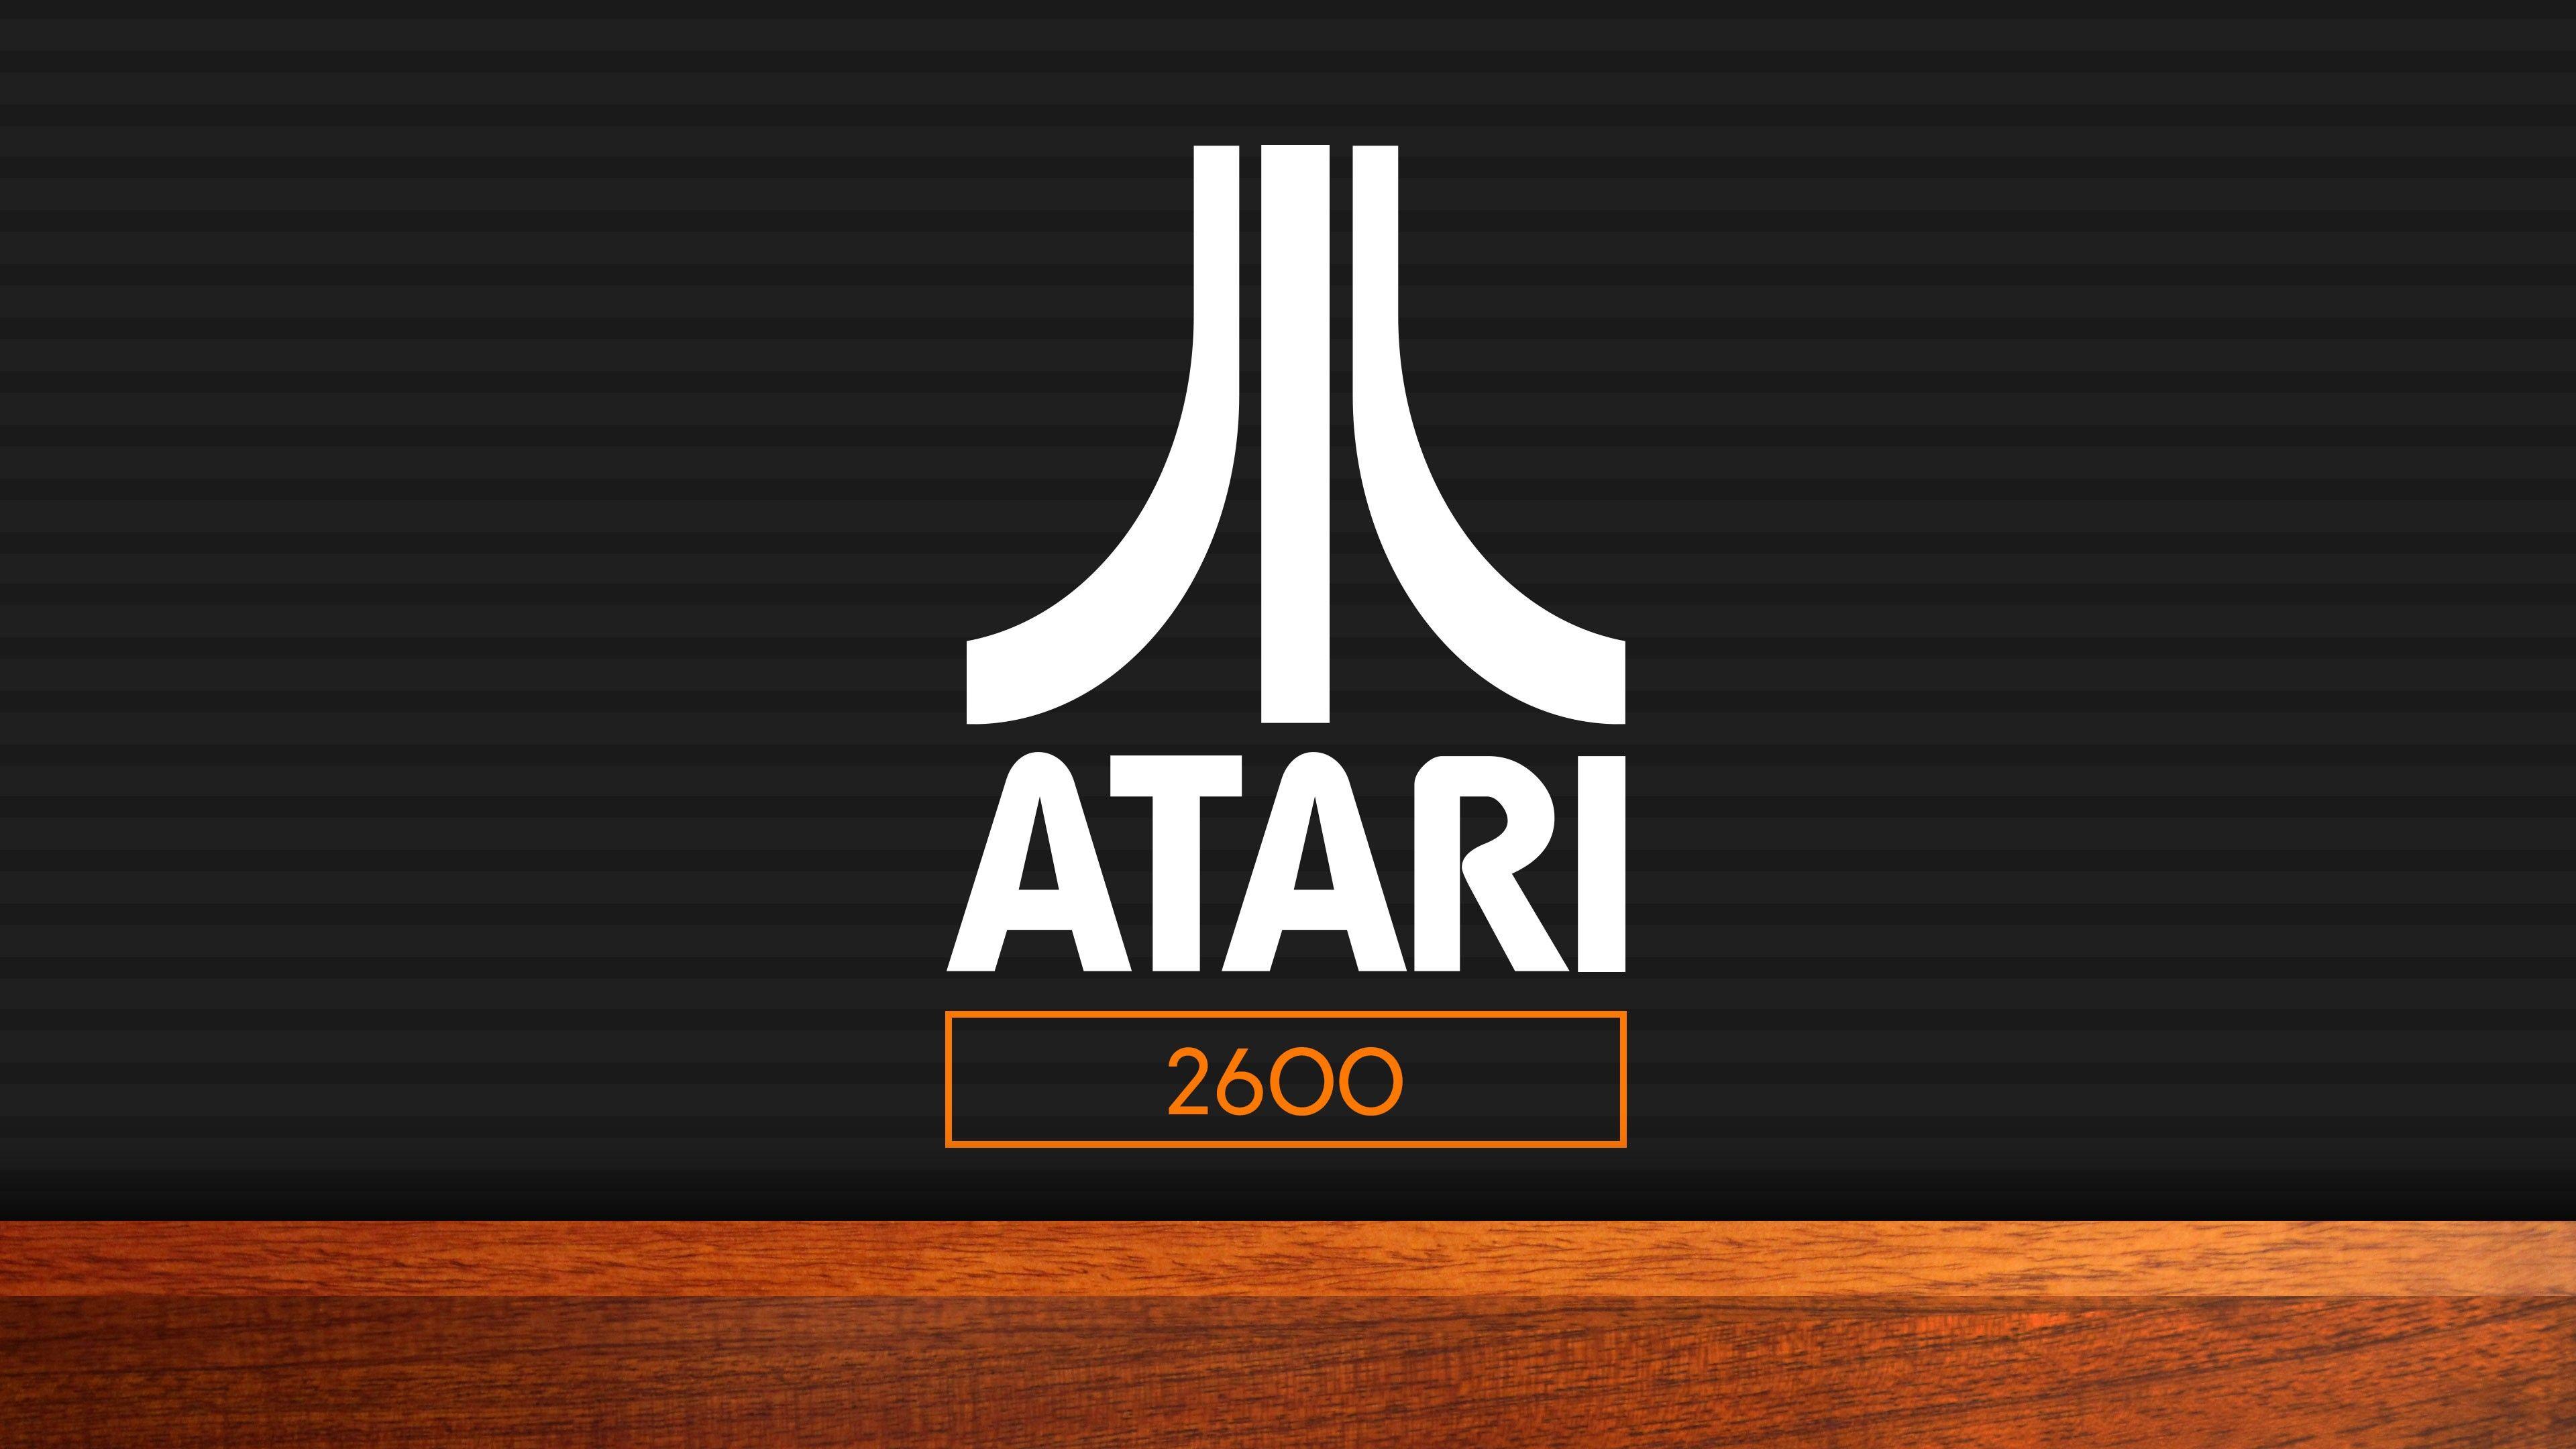 Atari 4k Ultra HD Wallpaper and Background Imagex2160